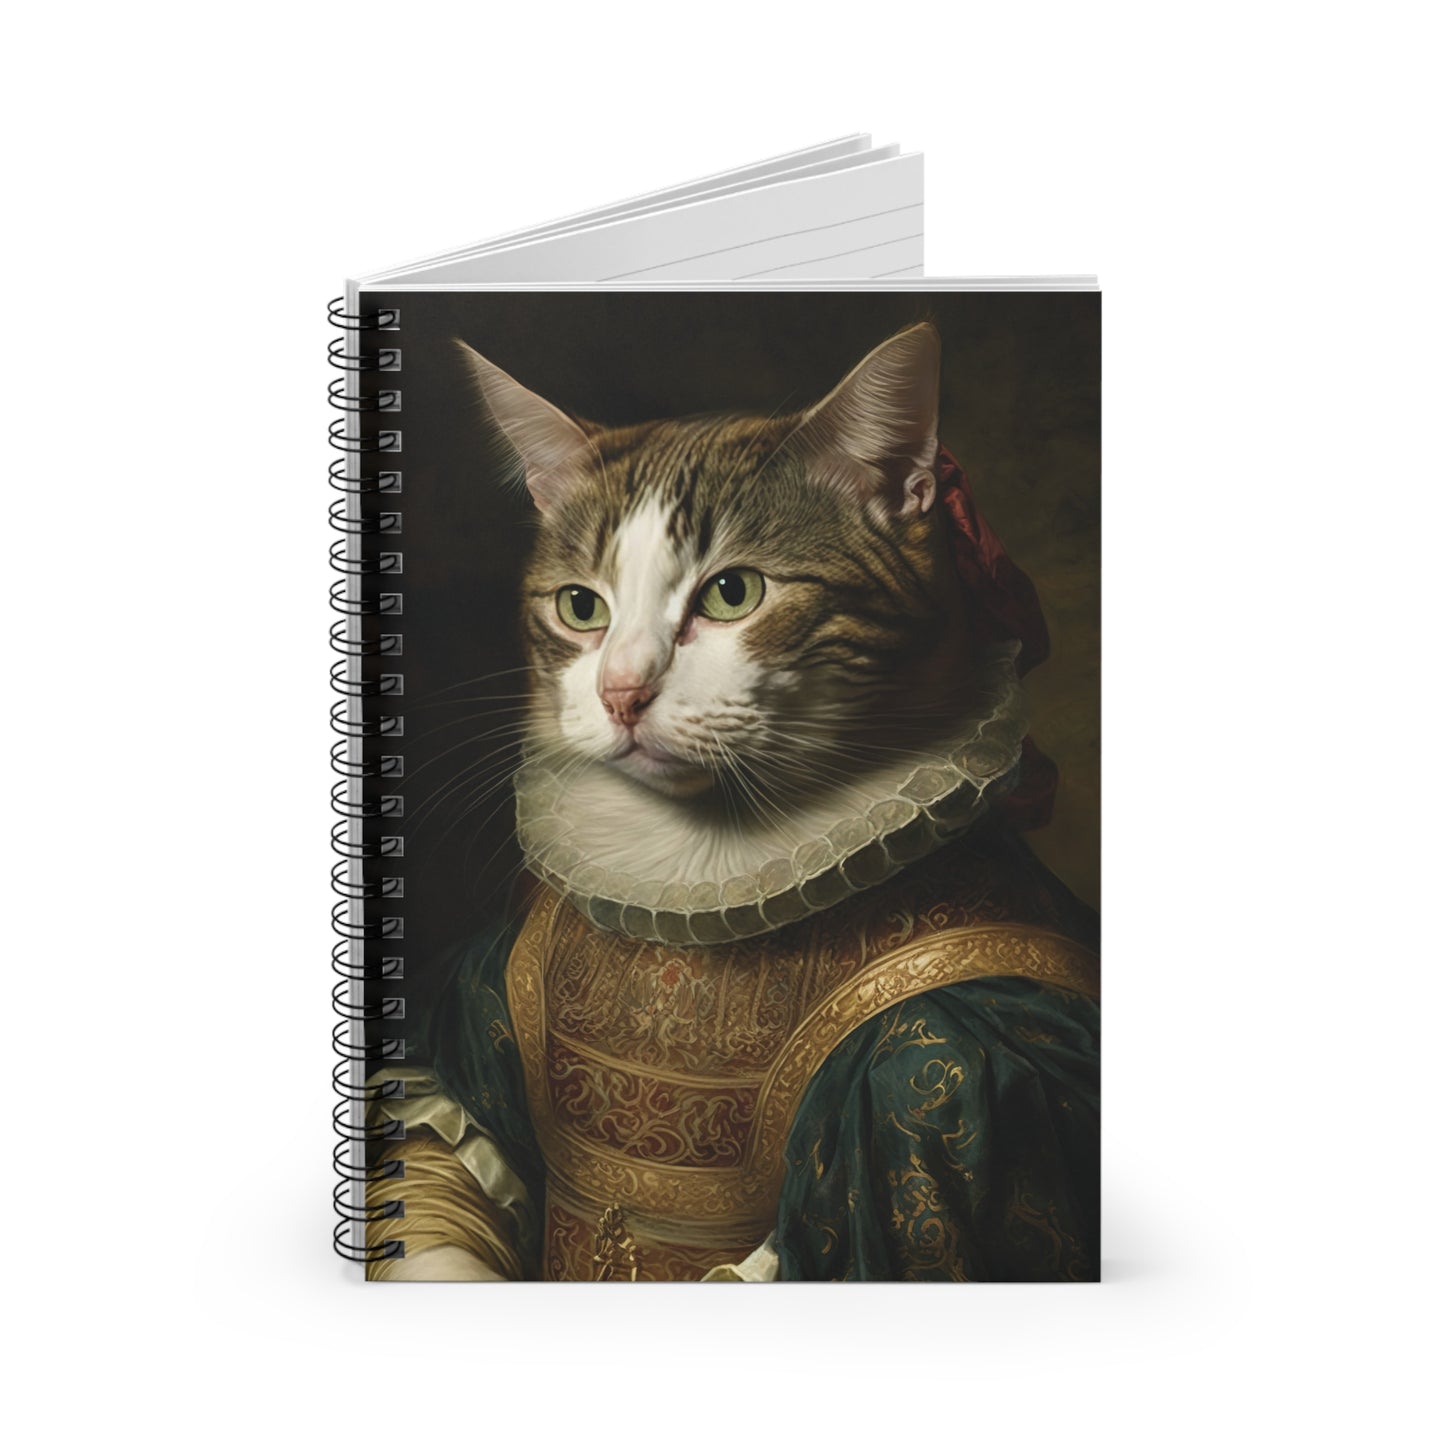 Cat Aristocrat | Spiral Notebook - Ruled Line